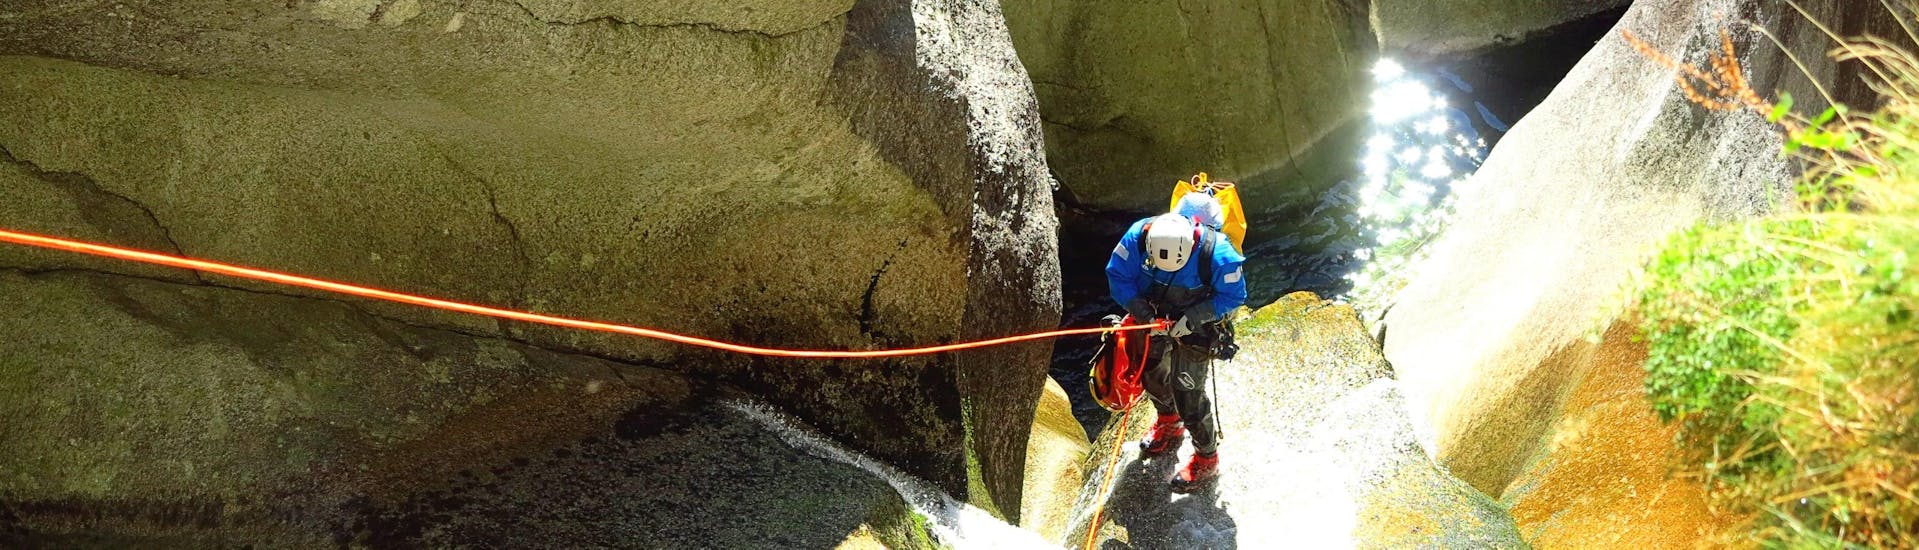 Un ragazzo si cala in corda durante il Canyoning nel Sorba con Monterosa Canyoning.